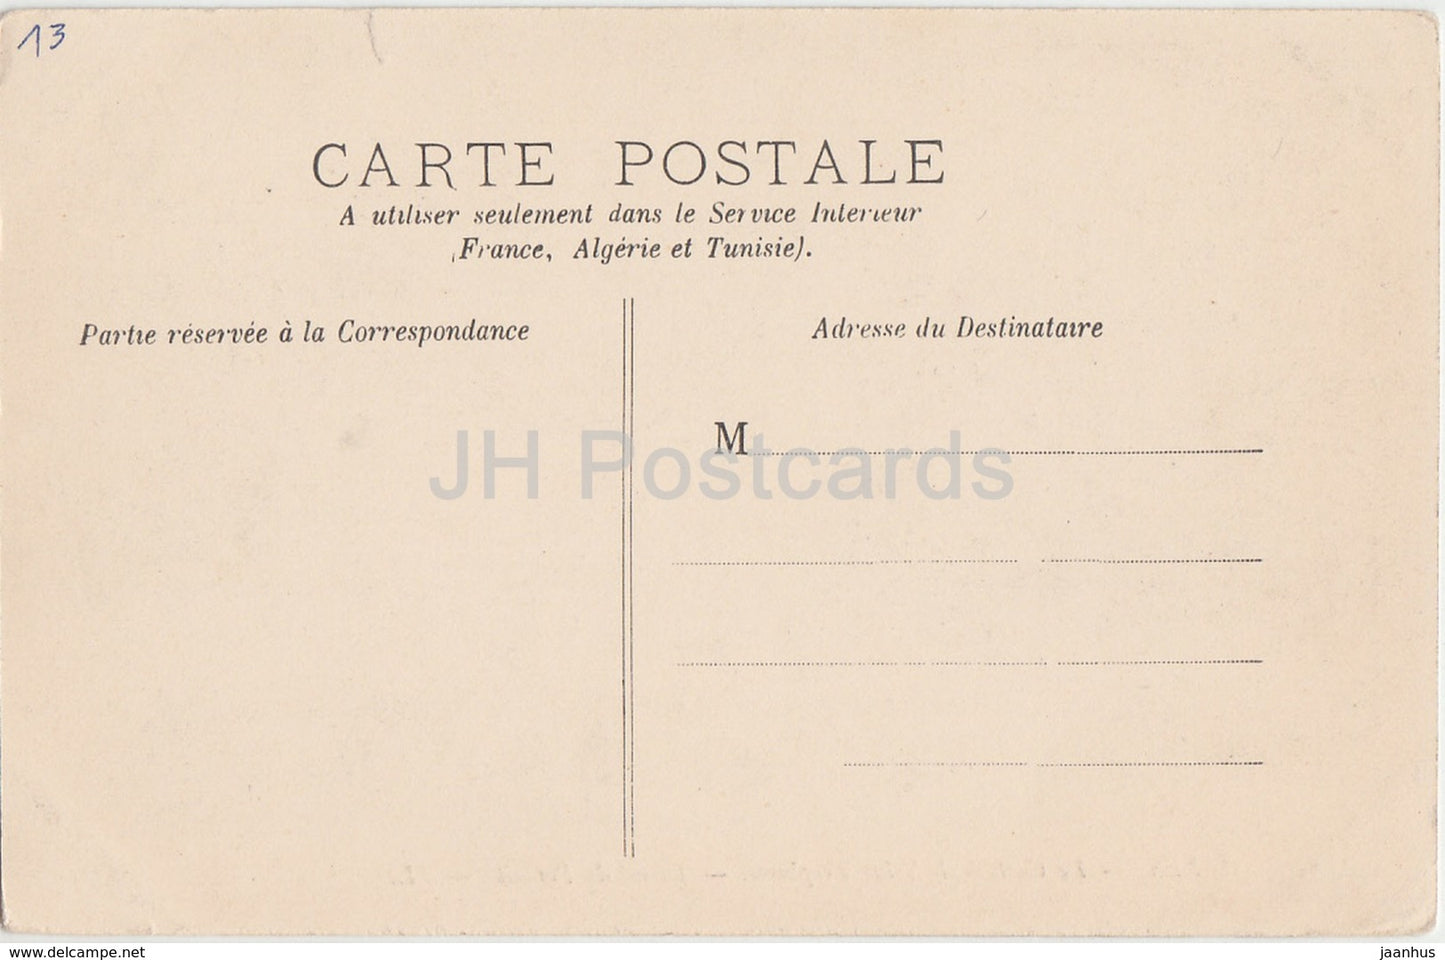 Arles - La Cathedrale Saint Trophime - Detail du Portail - cathedral - 28 - old postcard - France - unused